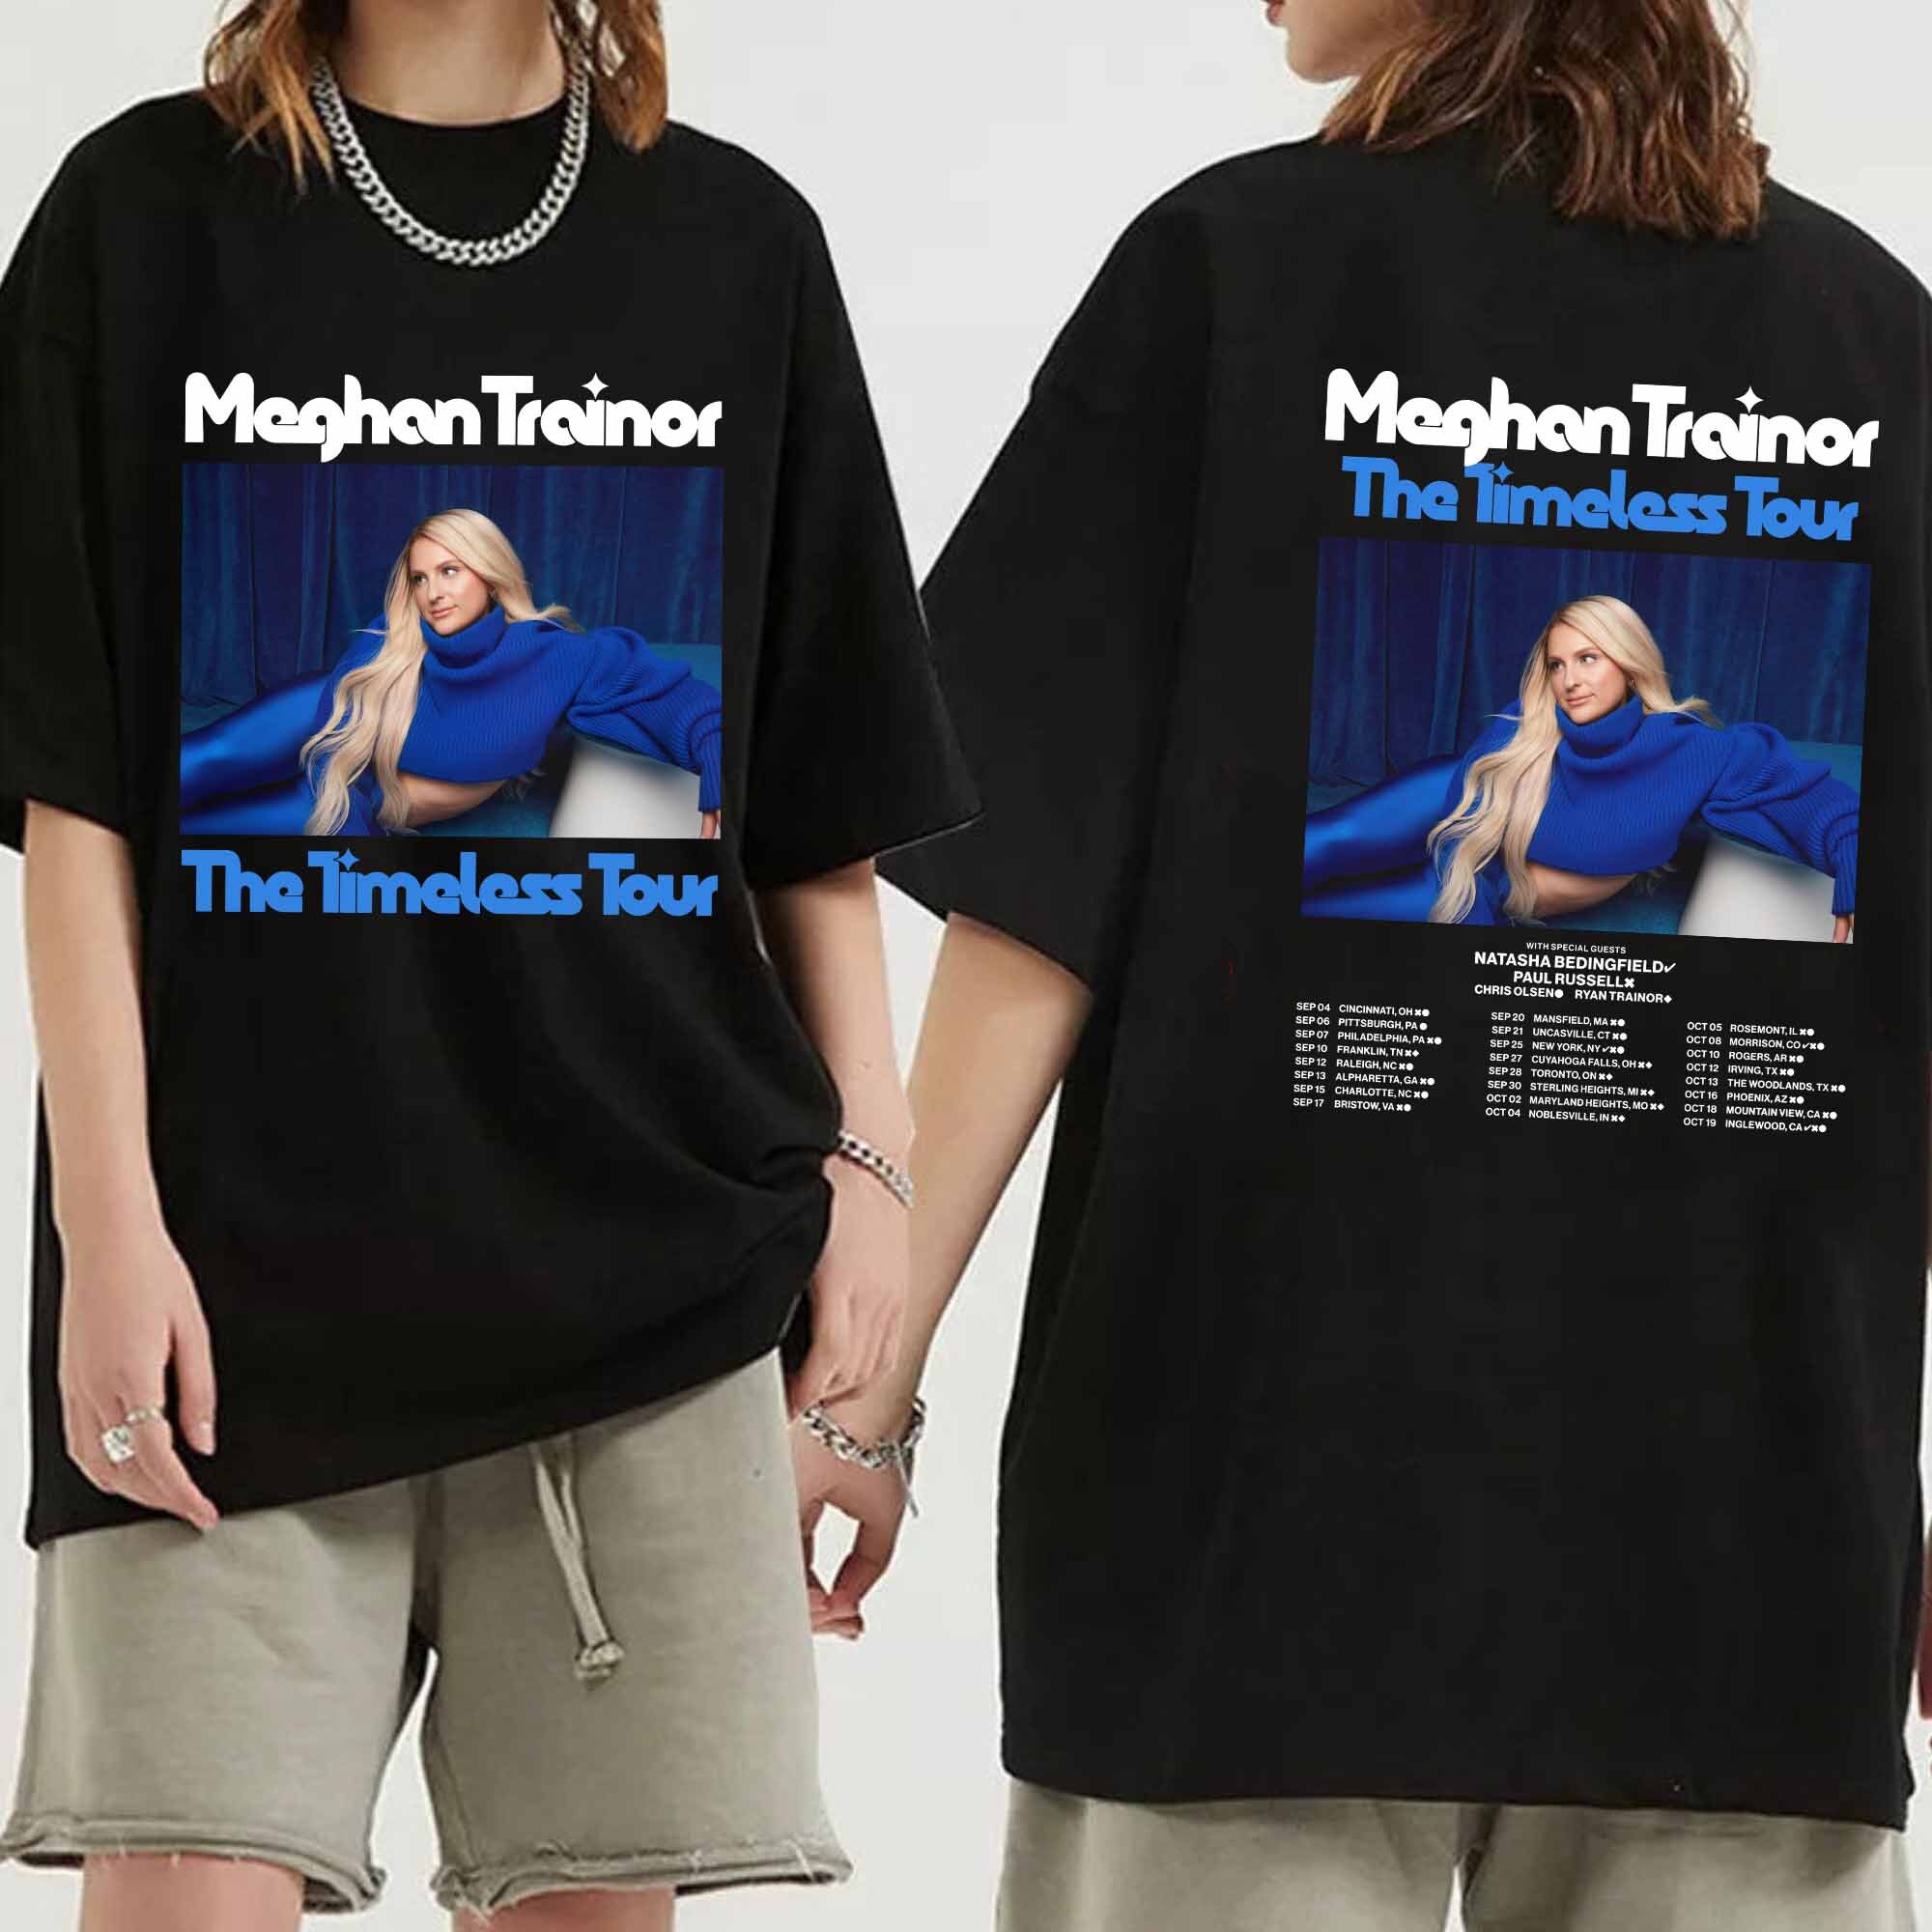 Meghan Trainor - The Timeless Tour 2024 Sweatshirt